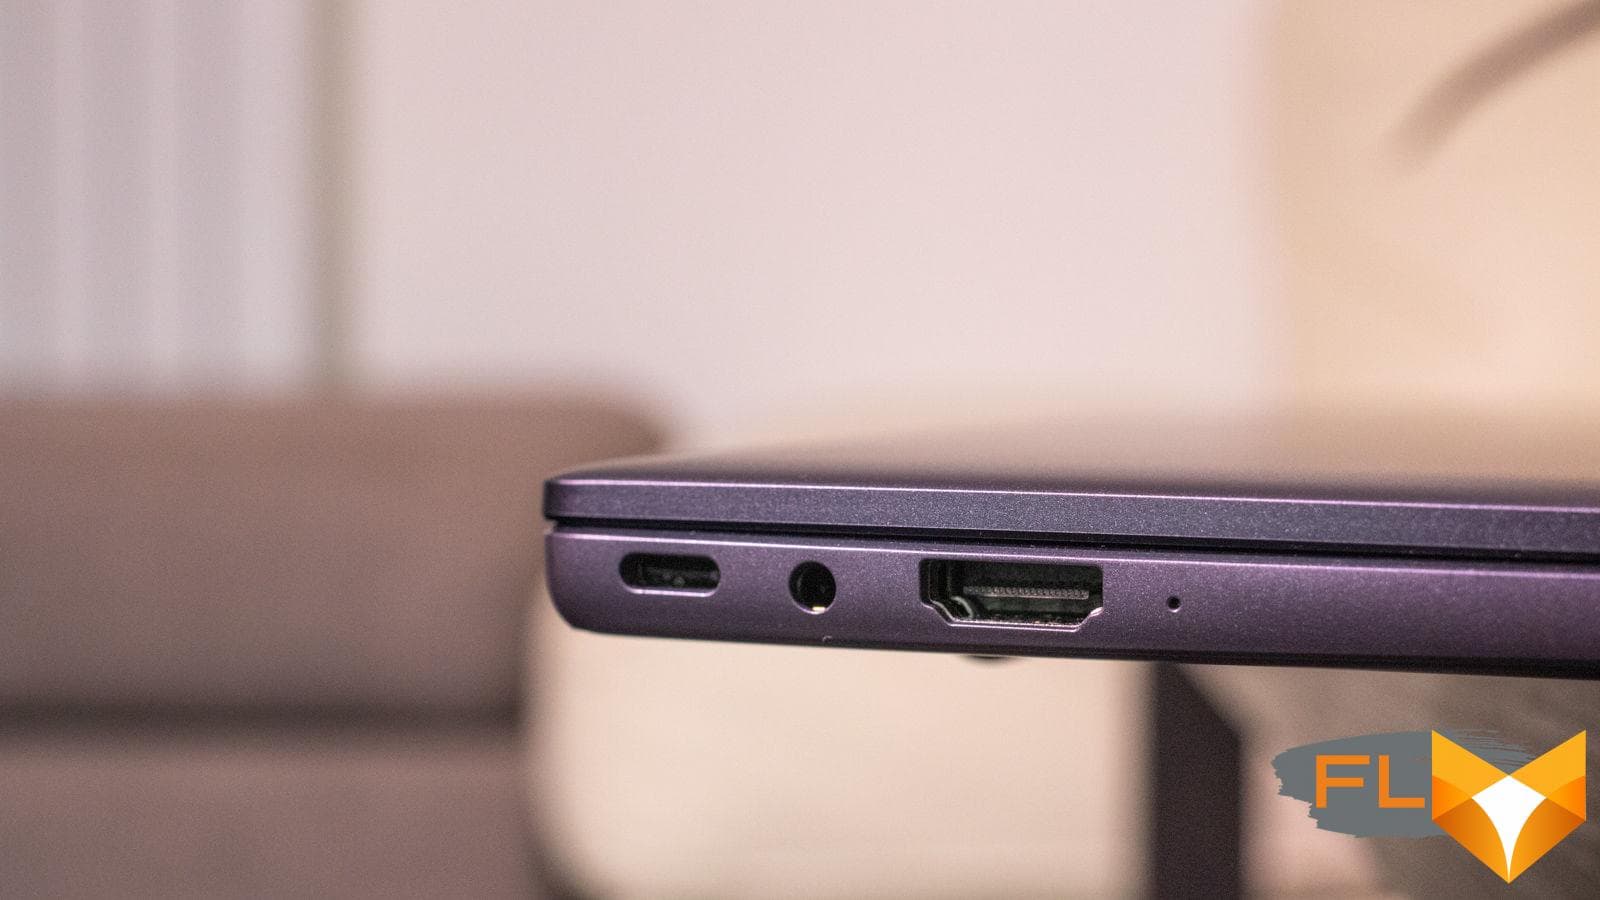 Huawei MateBook 14 AMD 2020 ports